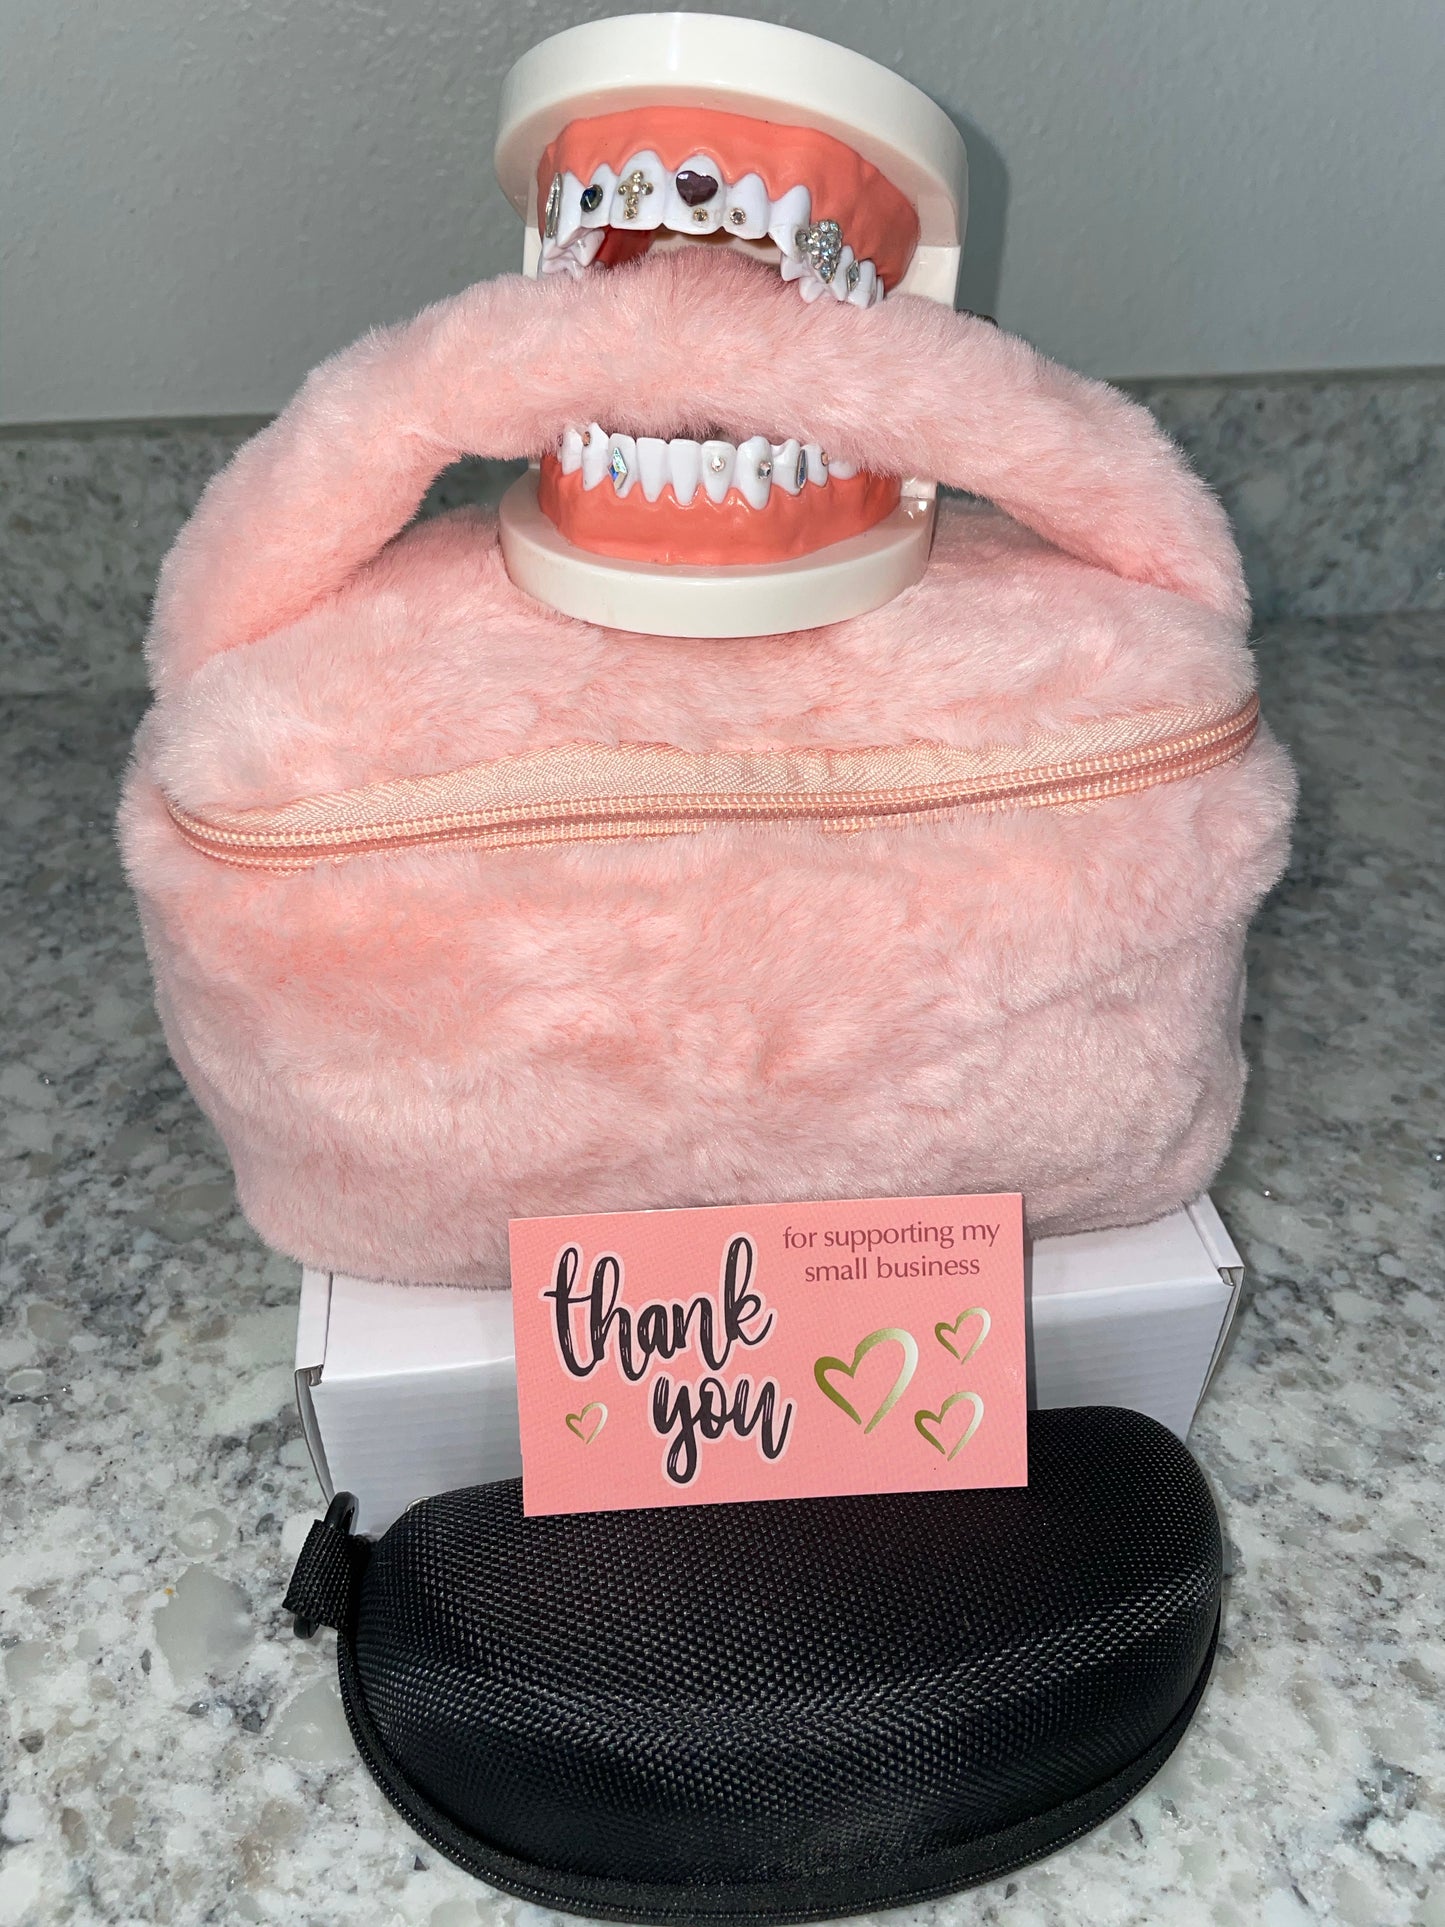 Tooth Gem Mini Starter Kit “Fluffy Edition”